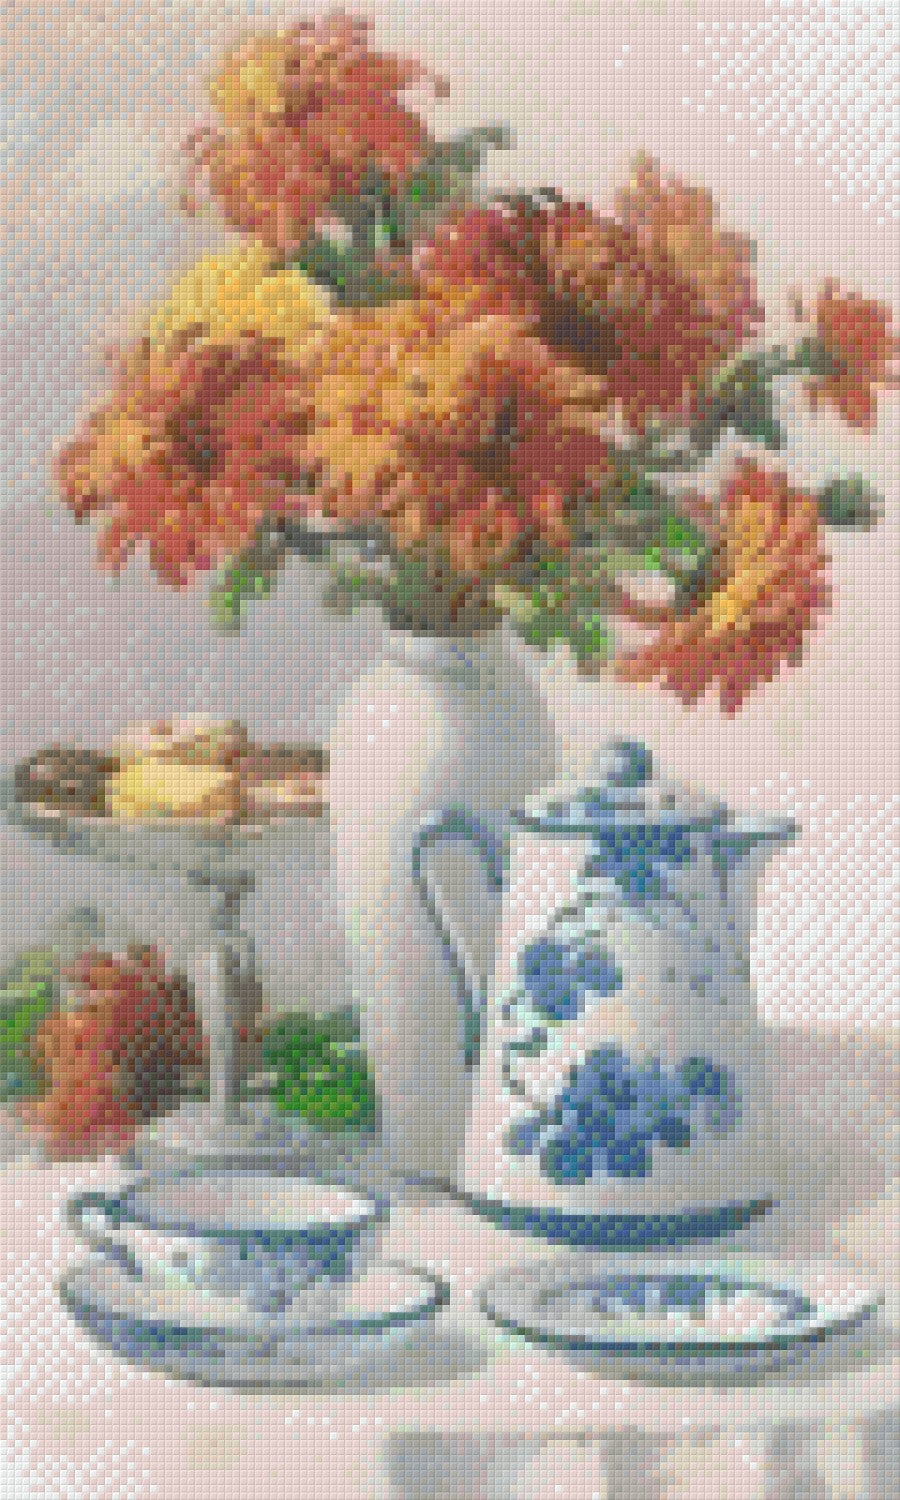 Pixelhobby classic set - Delft blue jug with chrysanthemums